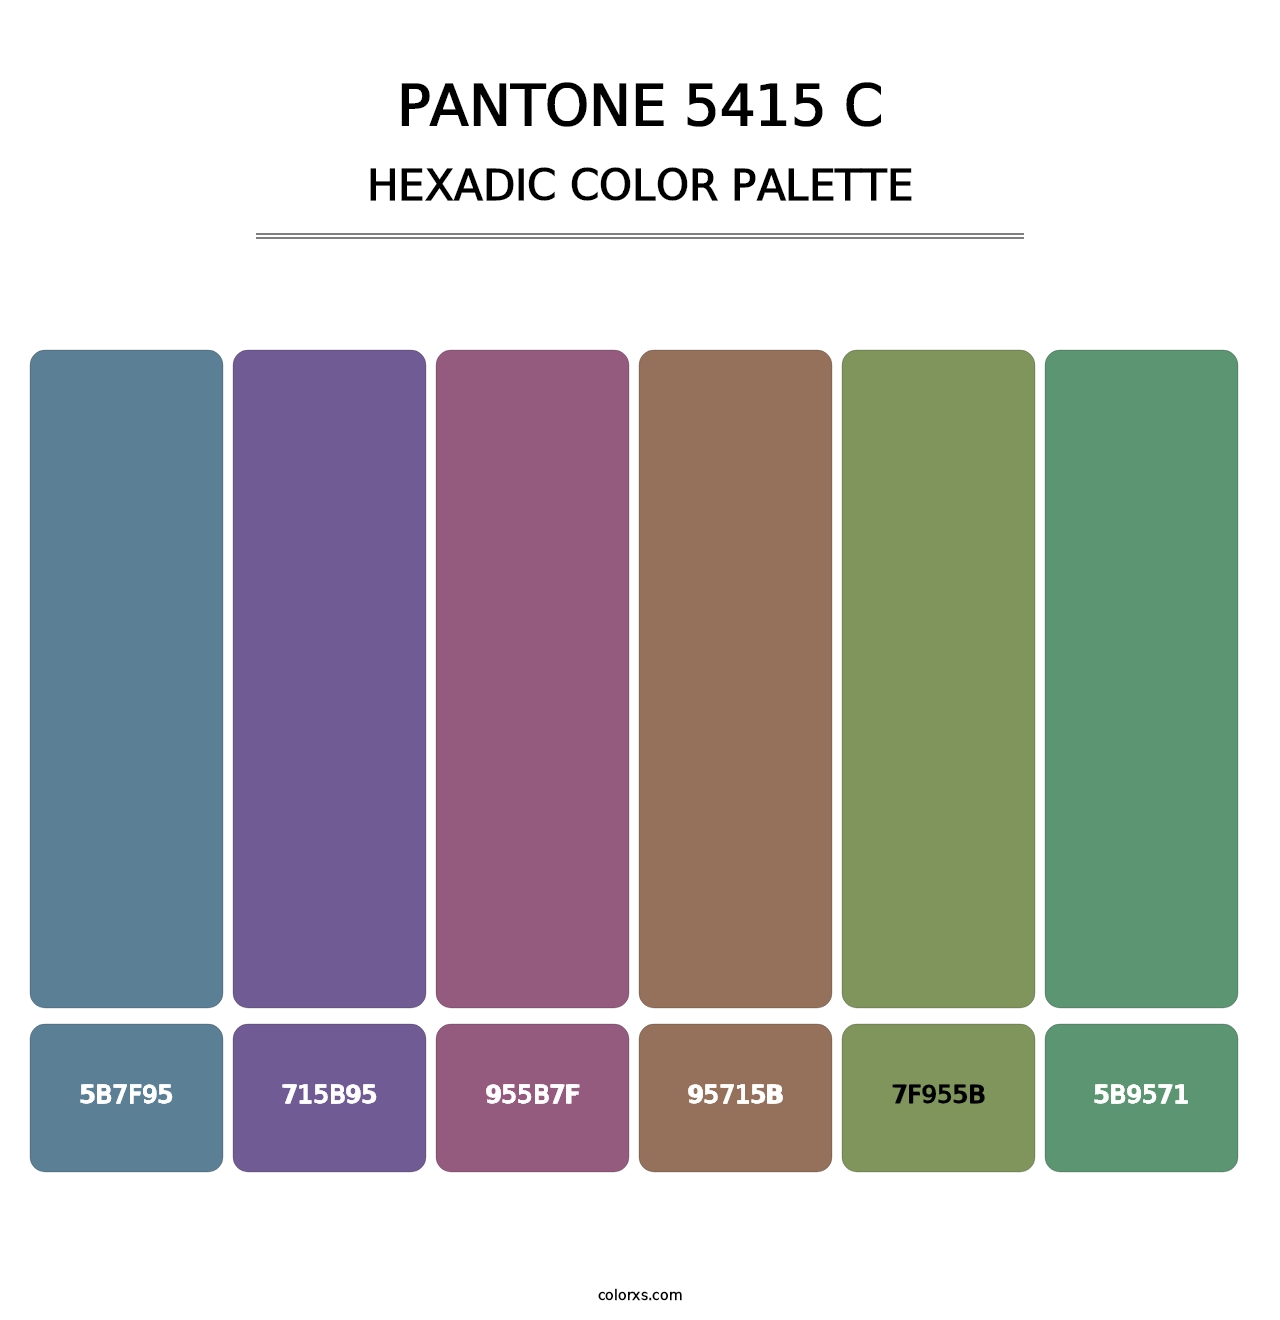 PANTONE 5415 C - Hexadic Color Palette